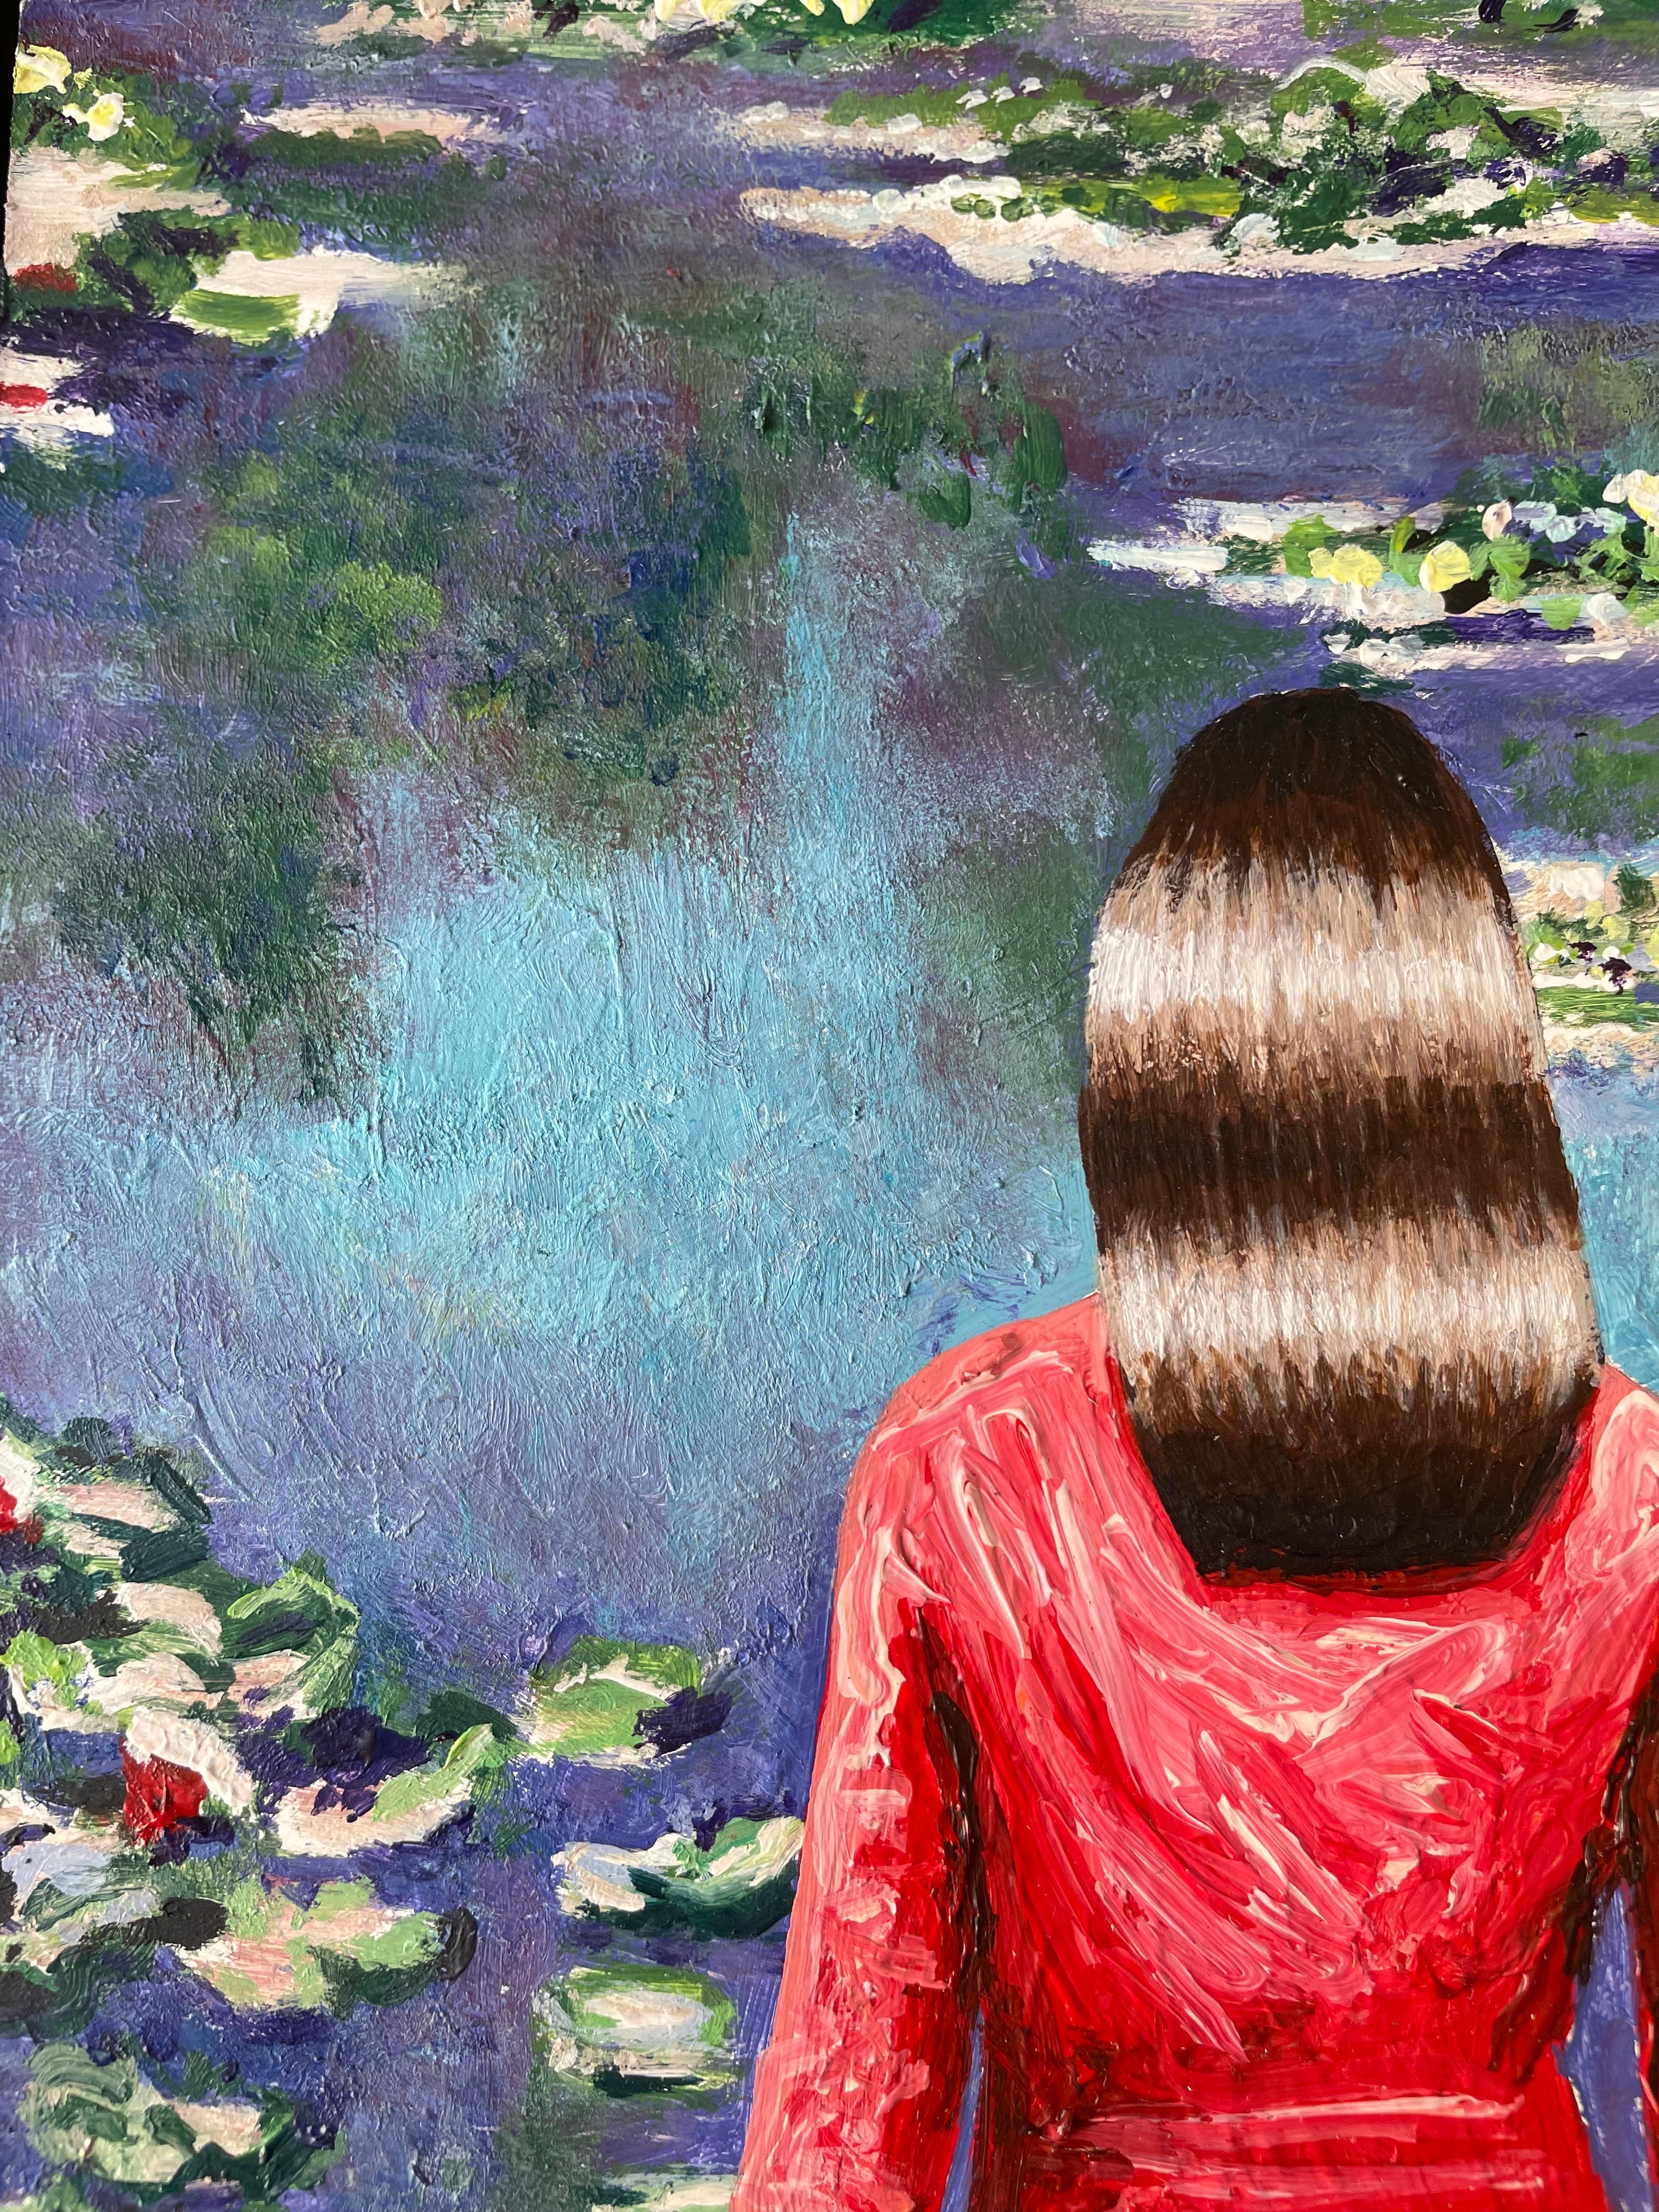 Gerard Boersma Water Lilies / Claude Monet